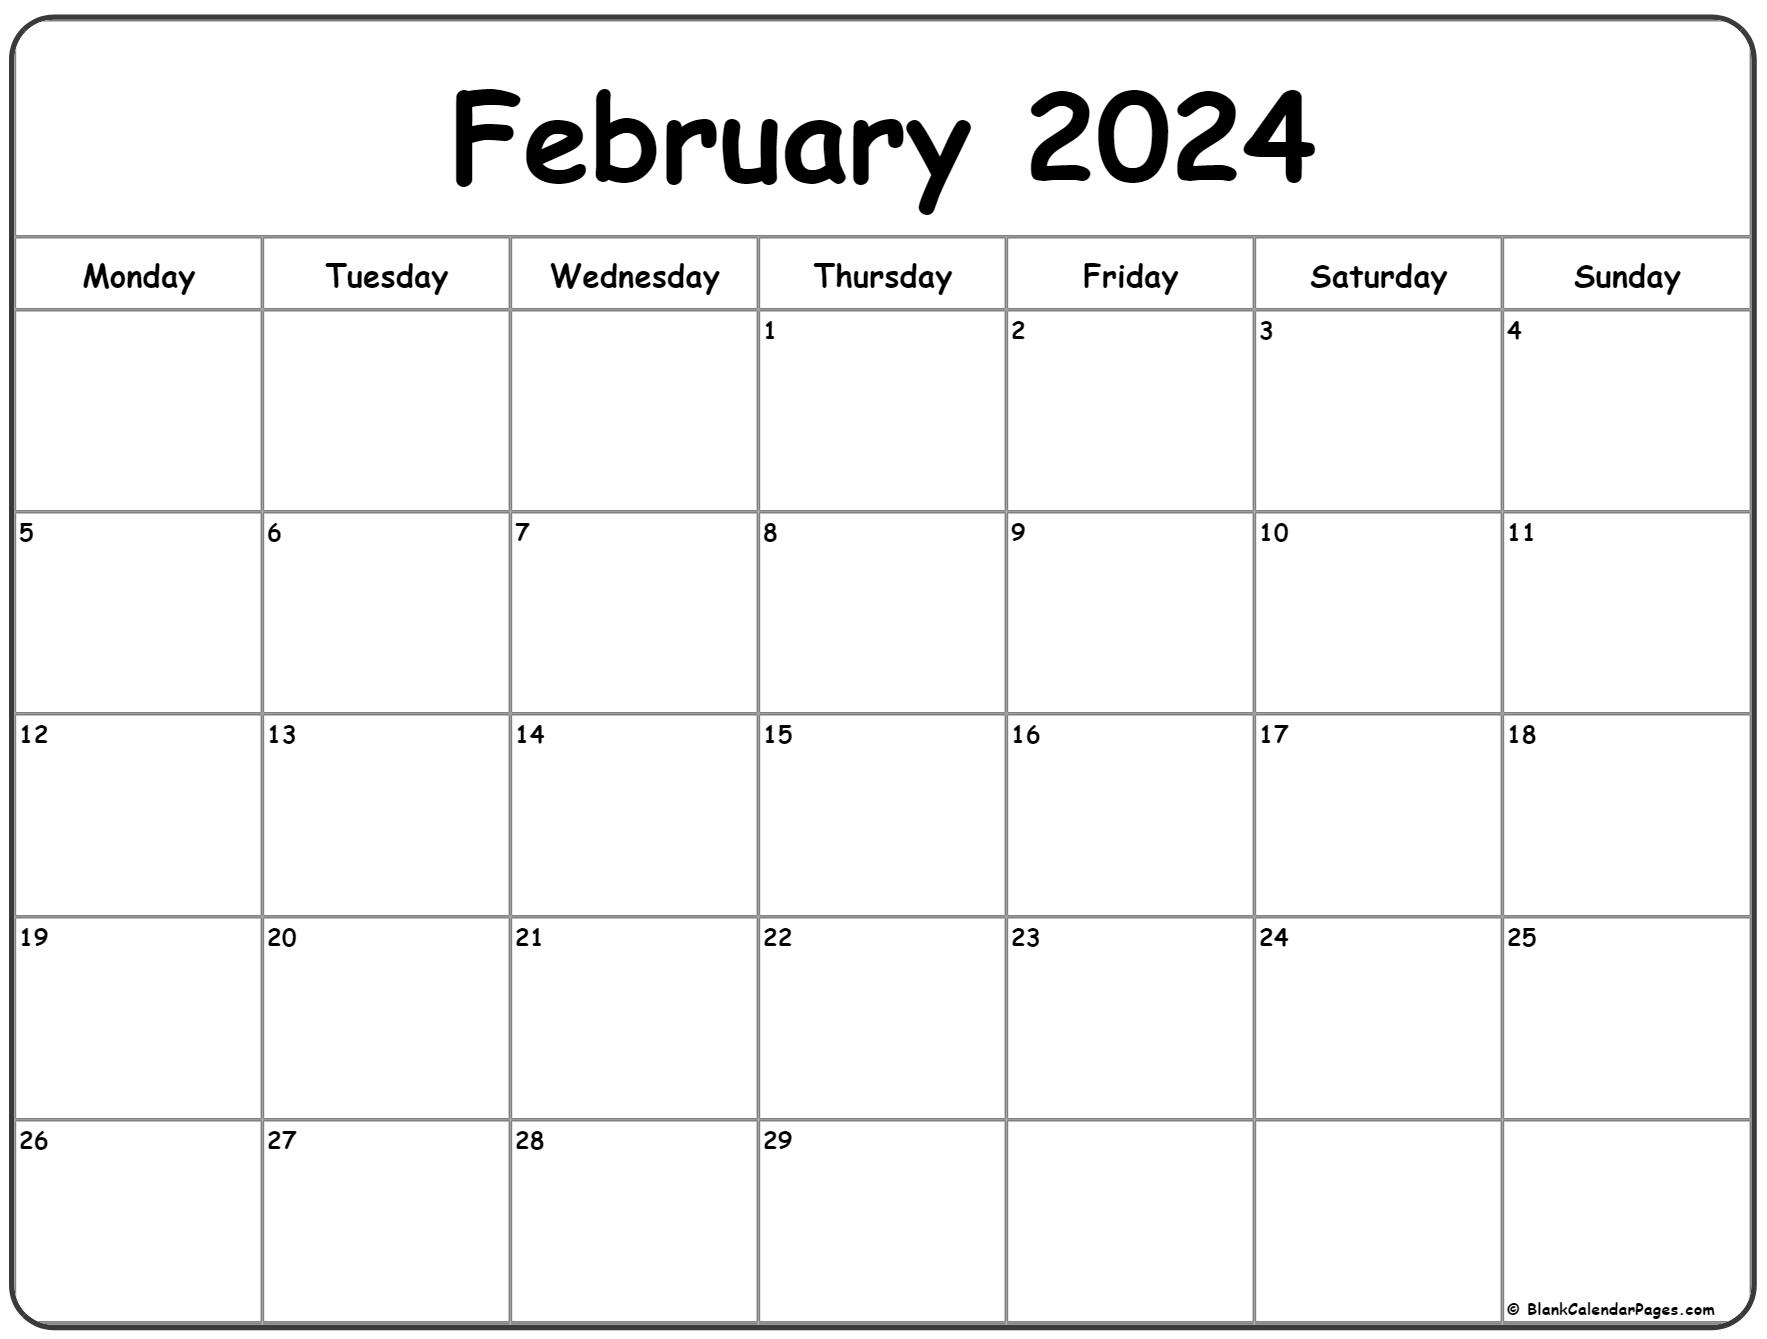 February 2024 Monday Calendar | Monday To Sunday | Printable Calendar 2024 February